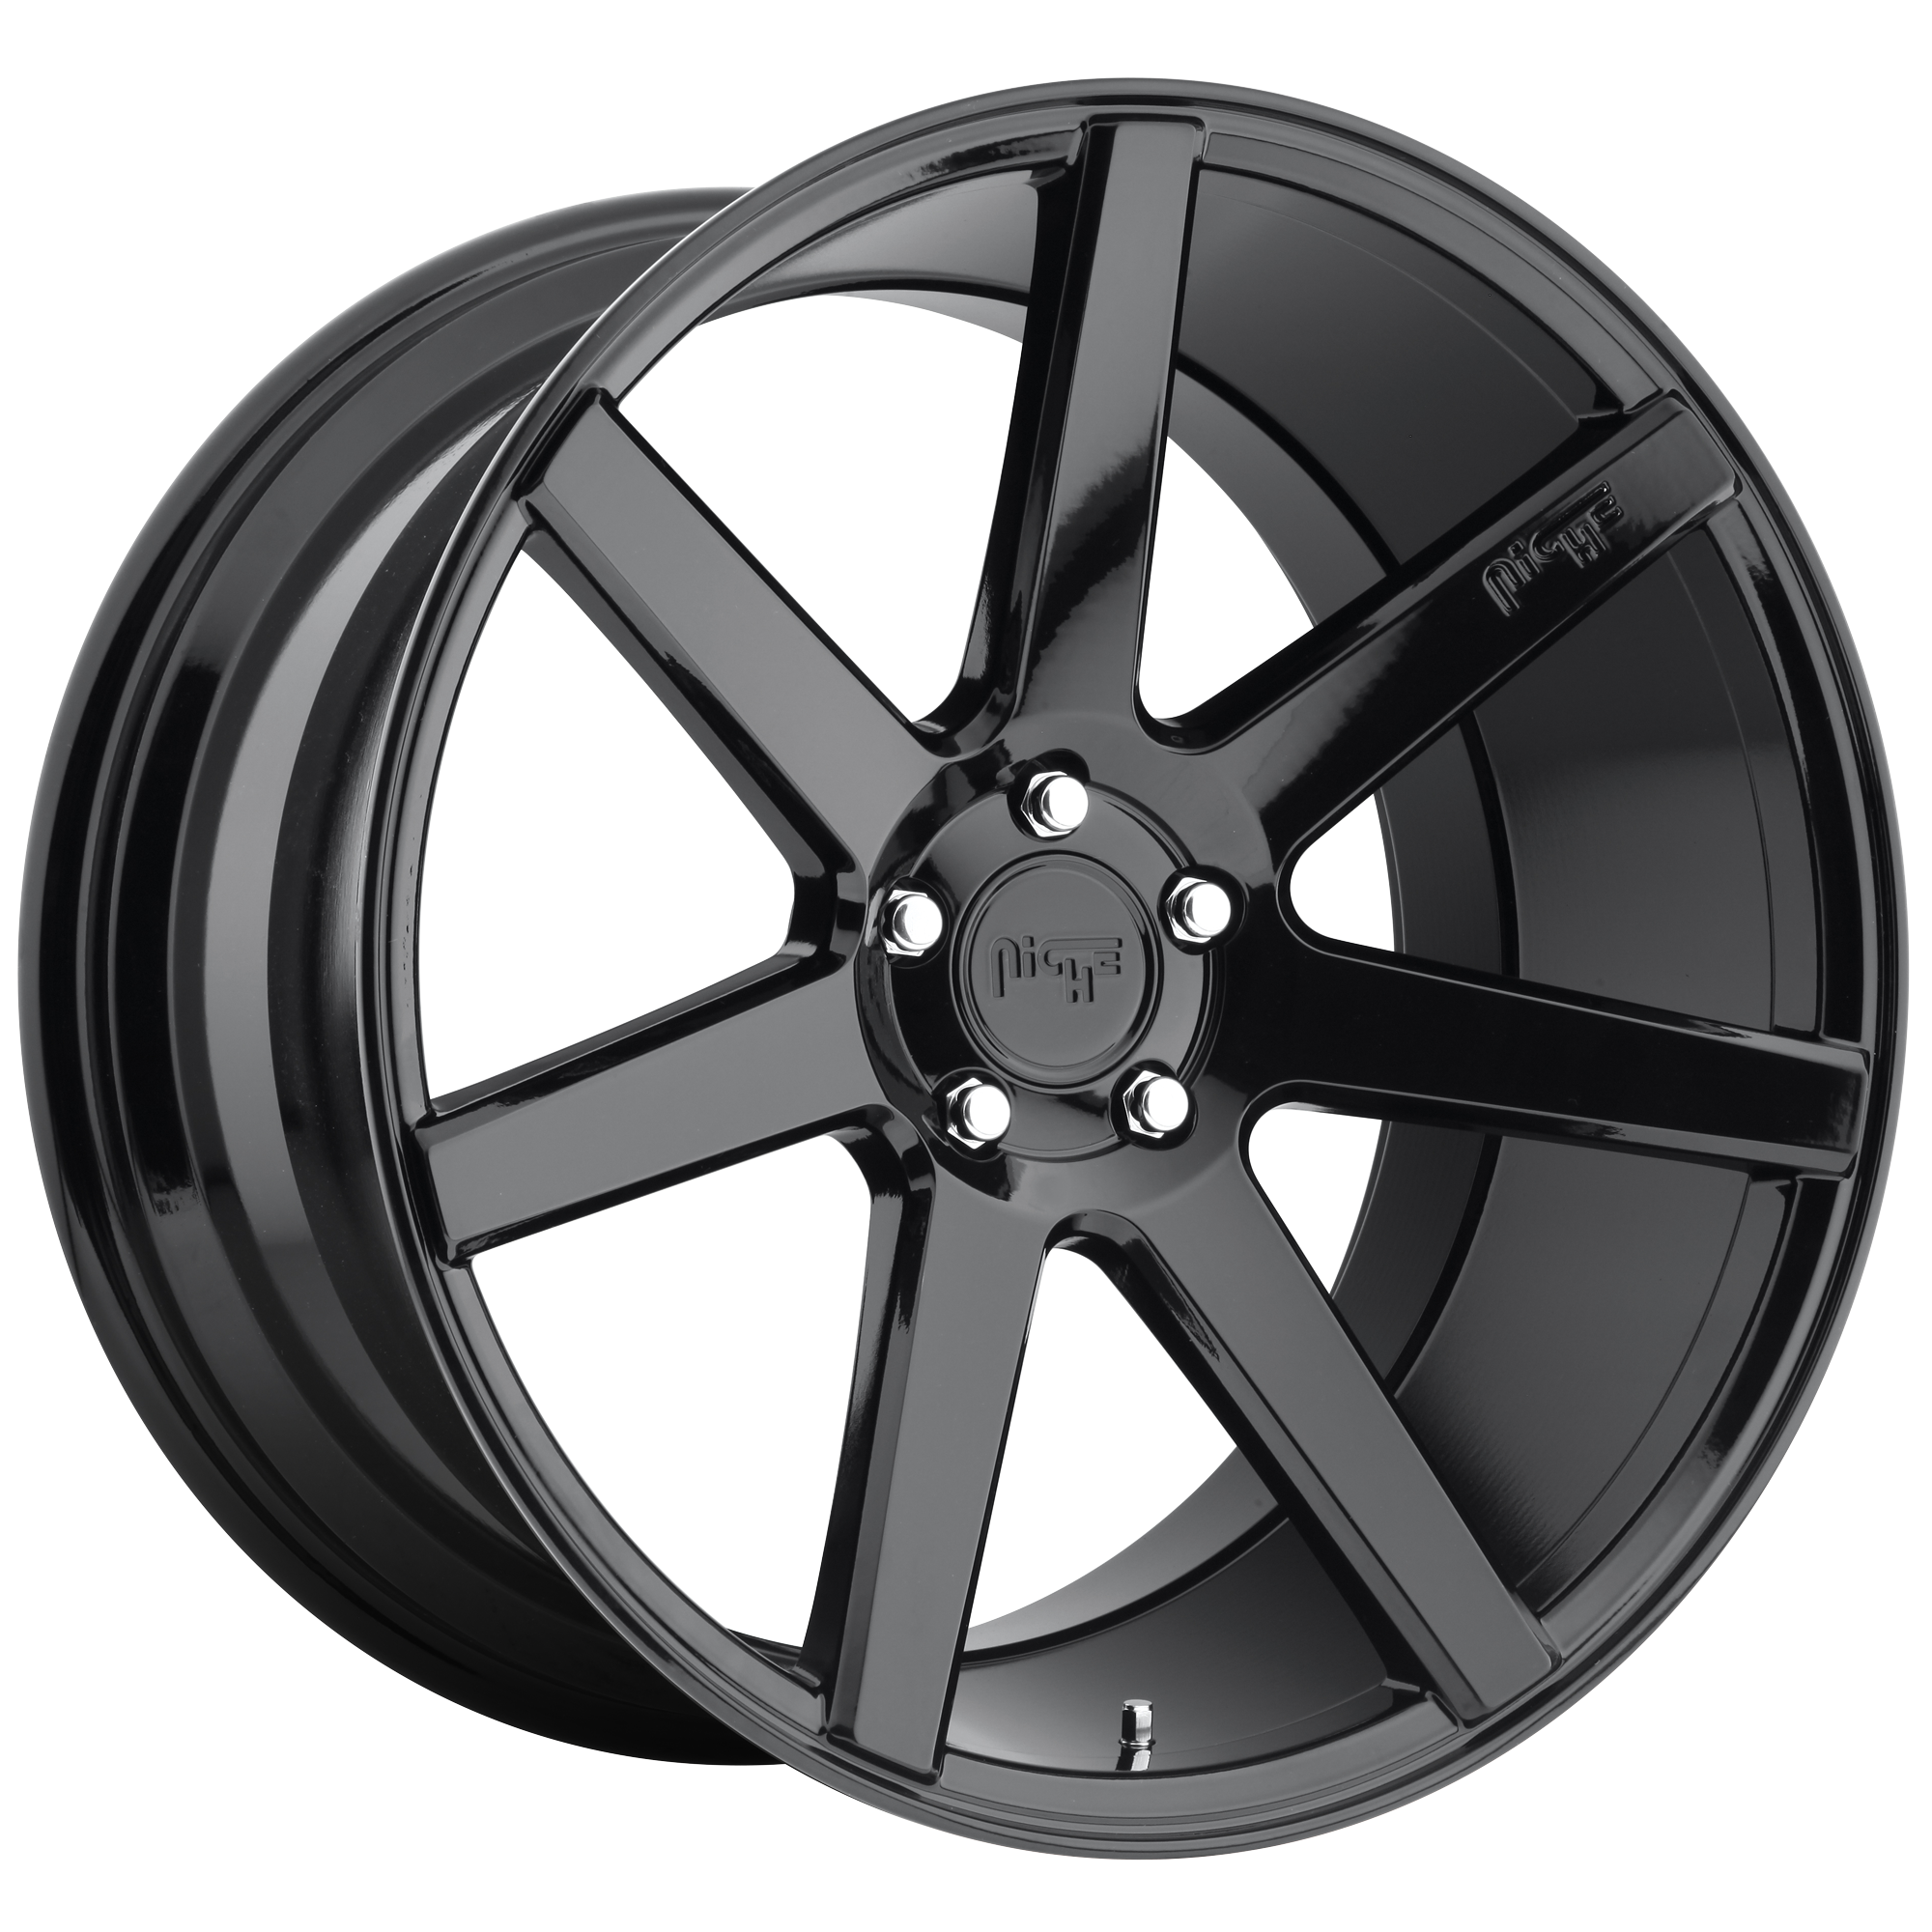 VERONA 18x8 5x115.00 GLOSS BLACK (40 mm) - Tires and Engine Performance